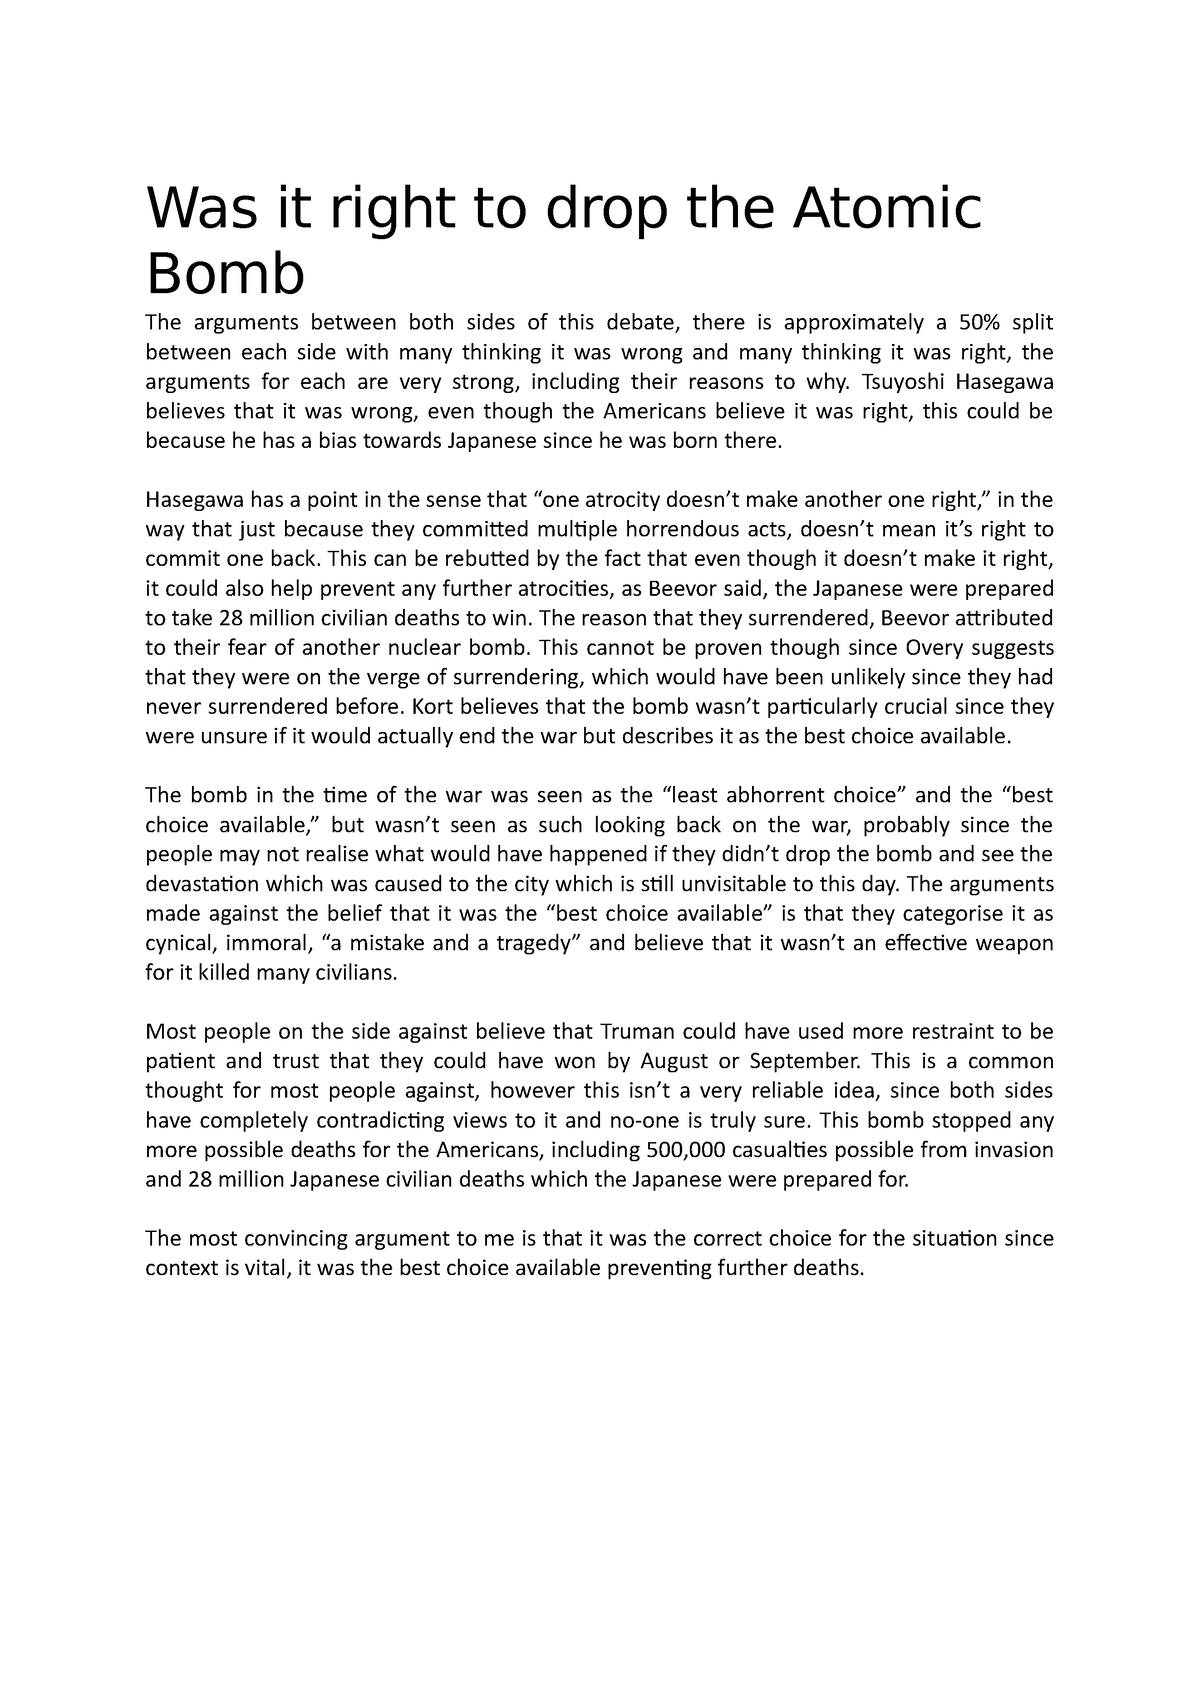 atomic bomb essays